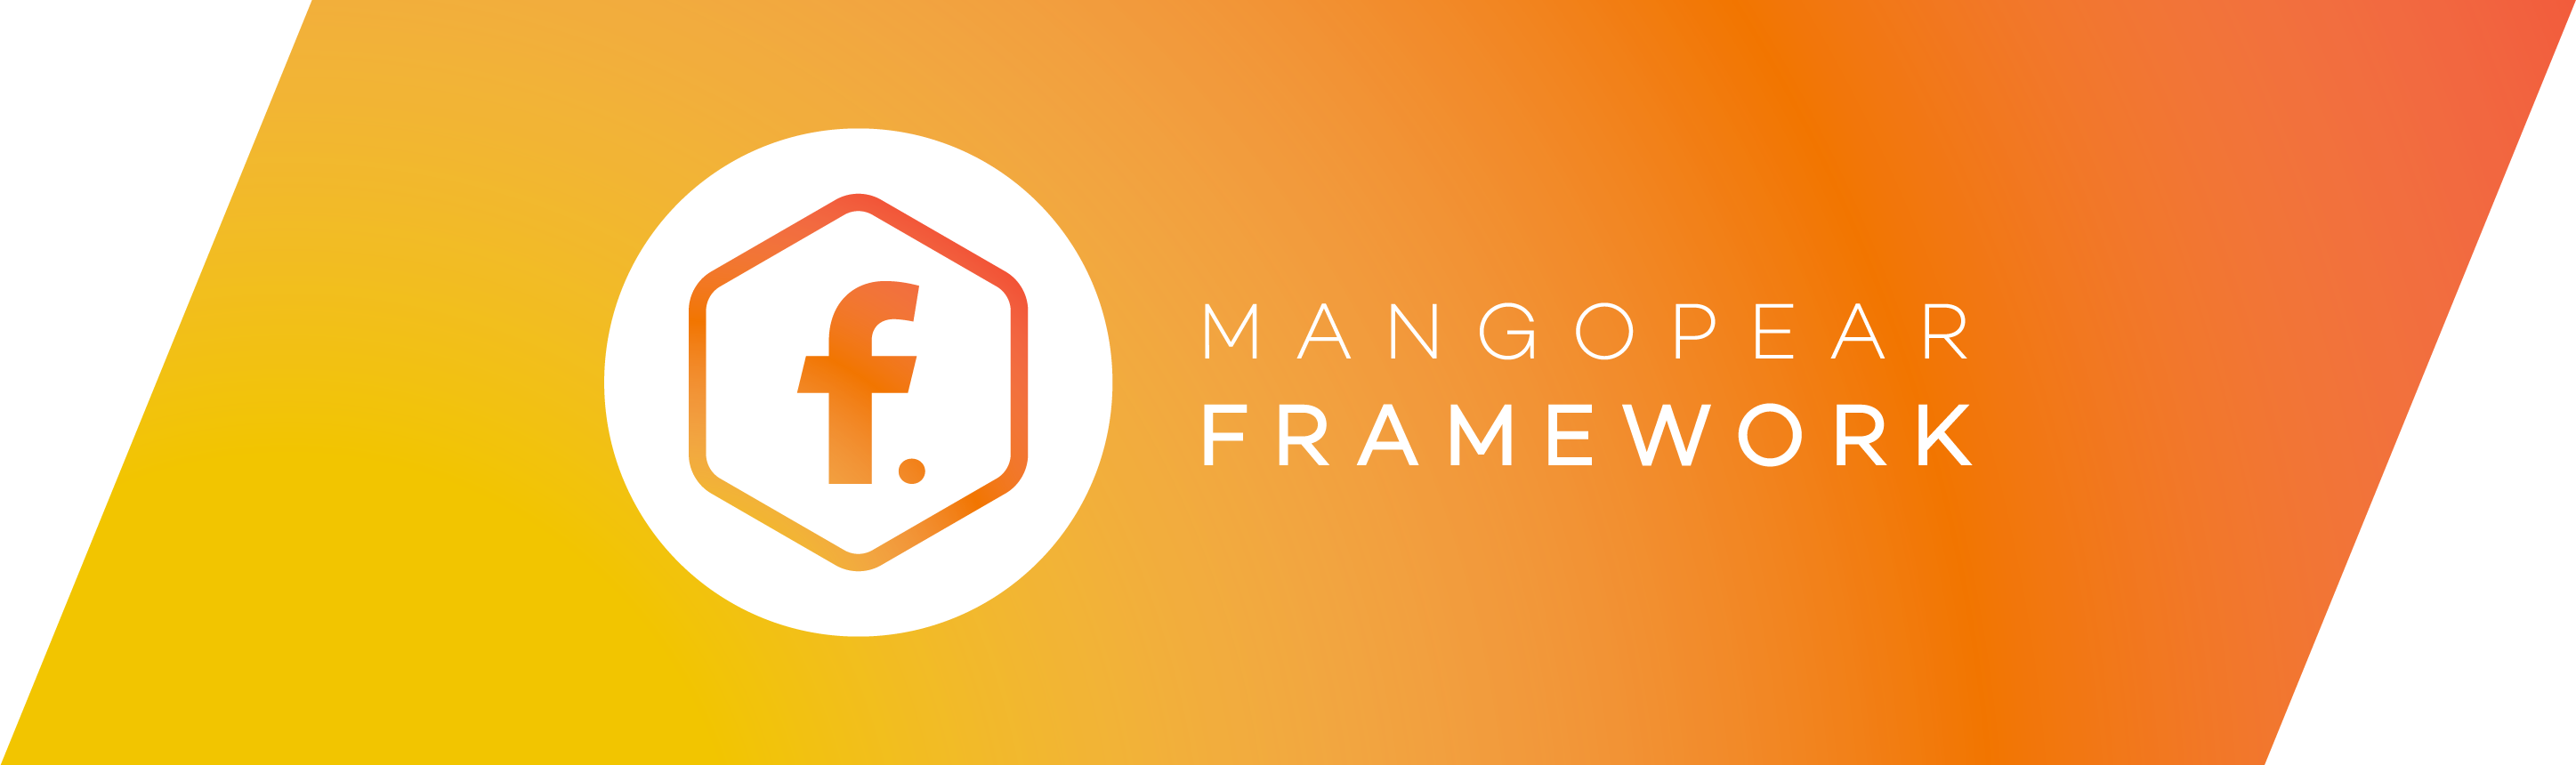 Mangopear framework